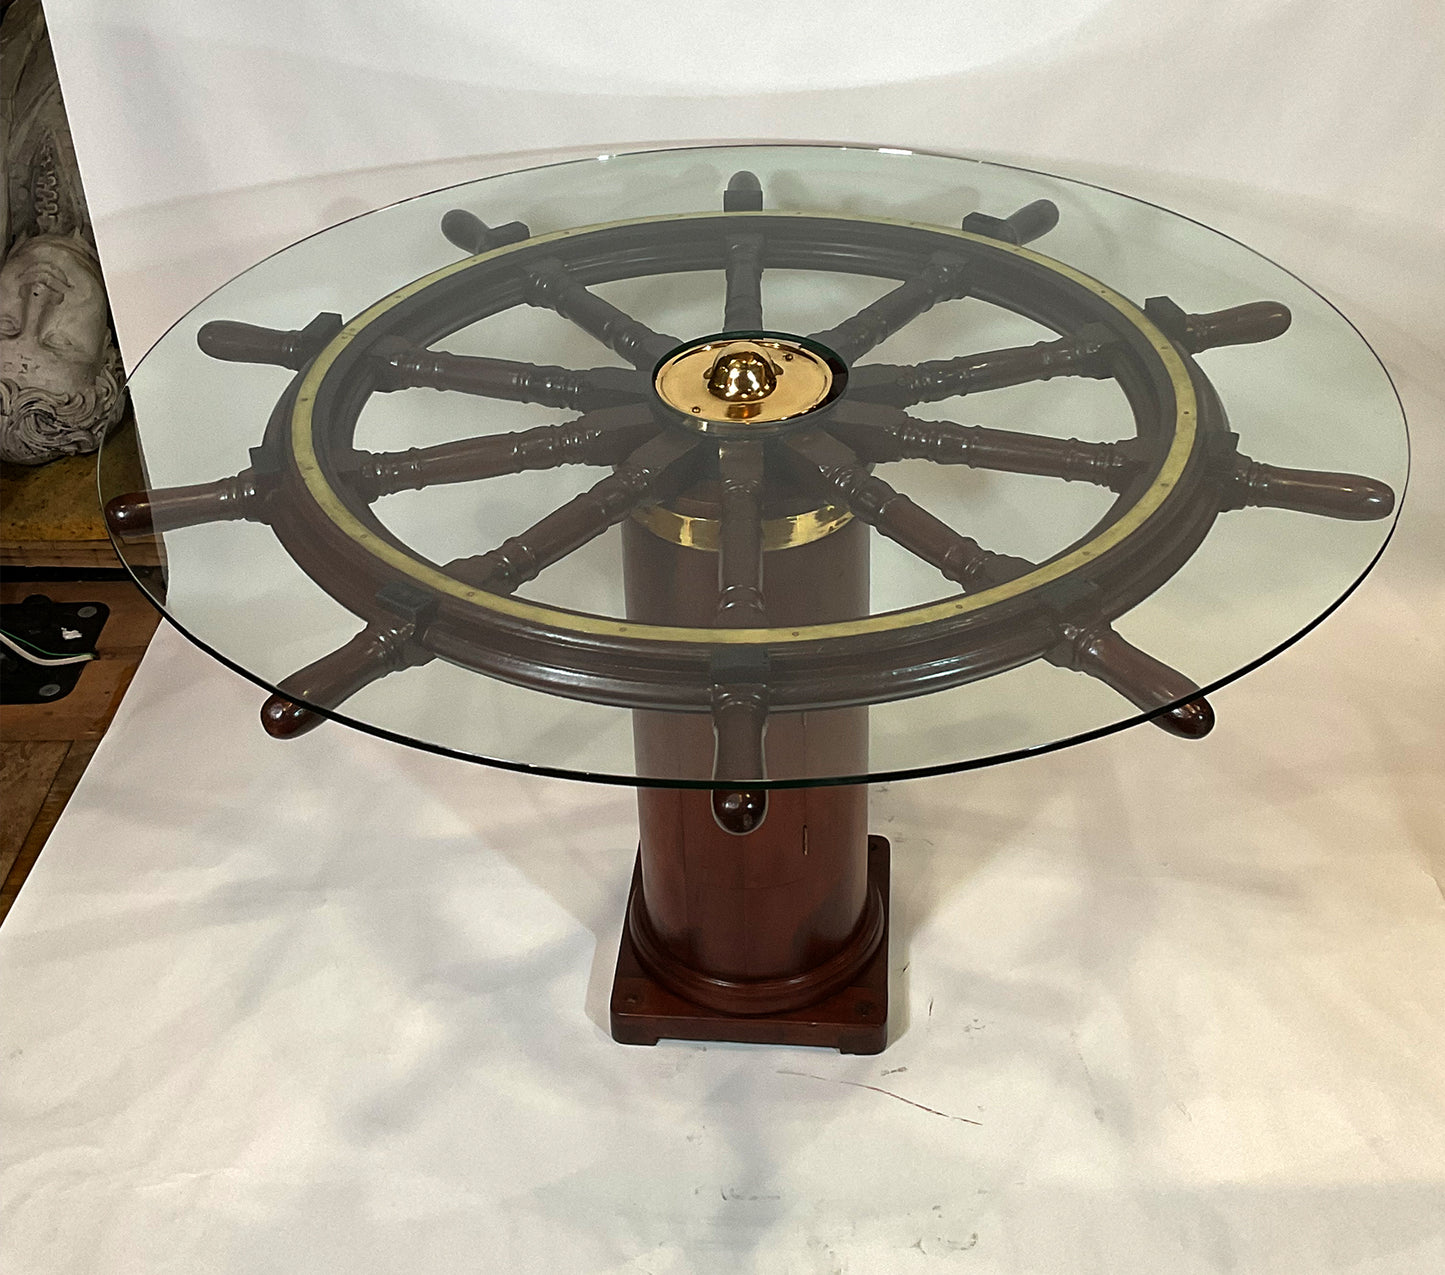 Ten Spoke Antique Ships Wheel Dining Table - Lannan Gallery